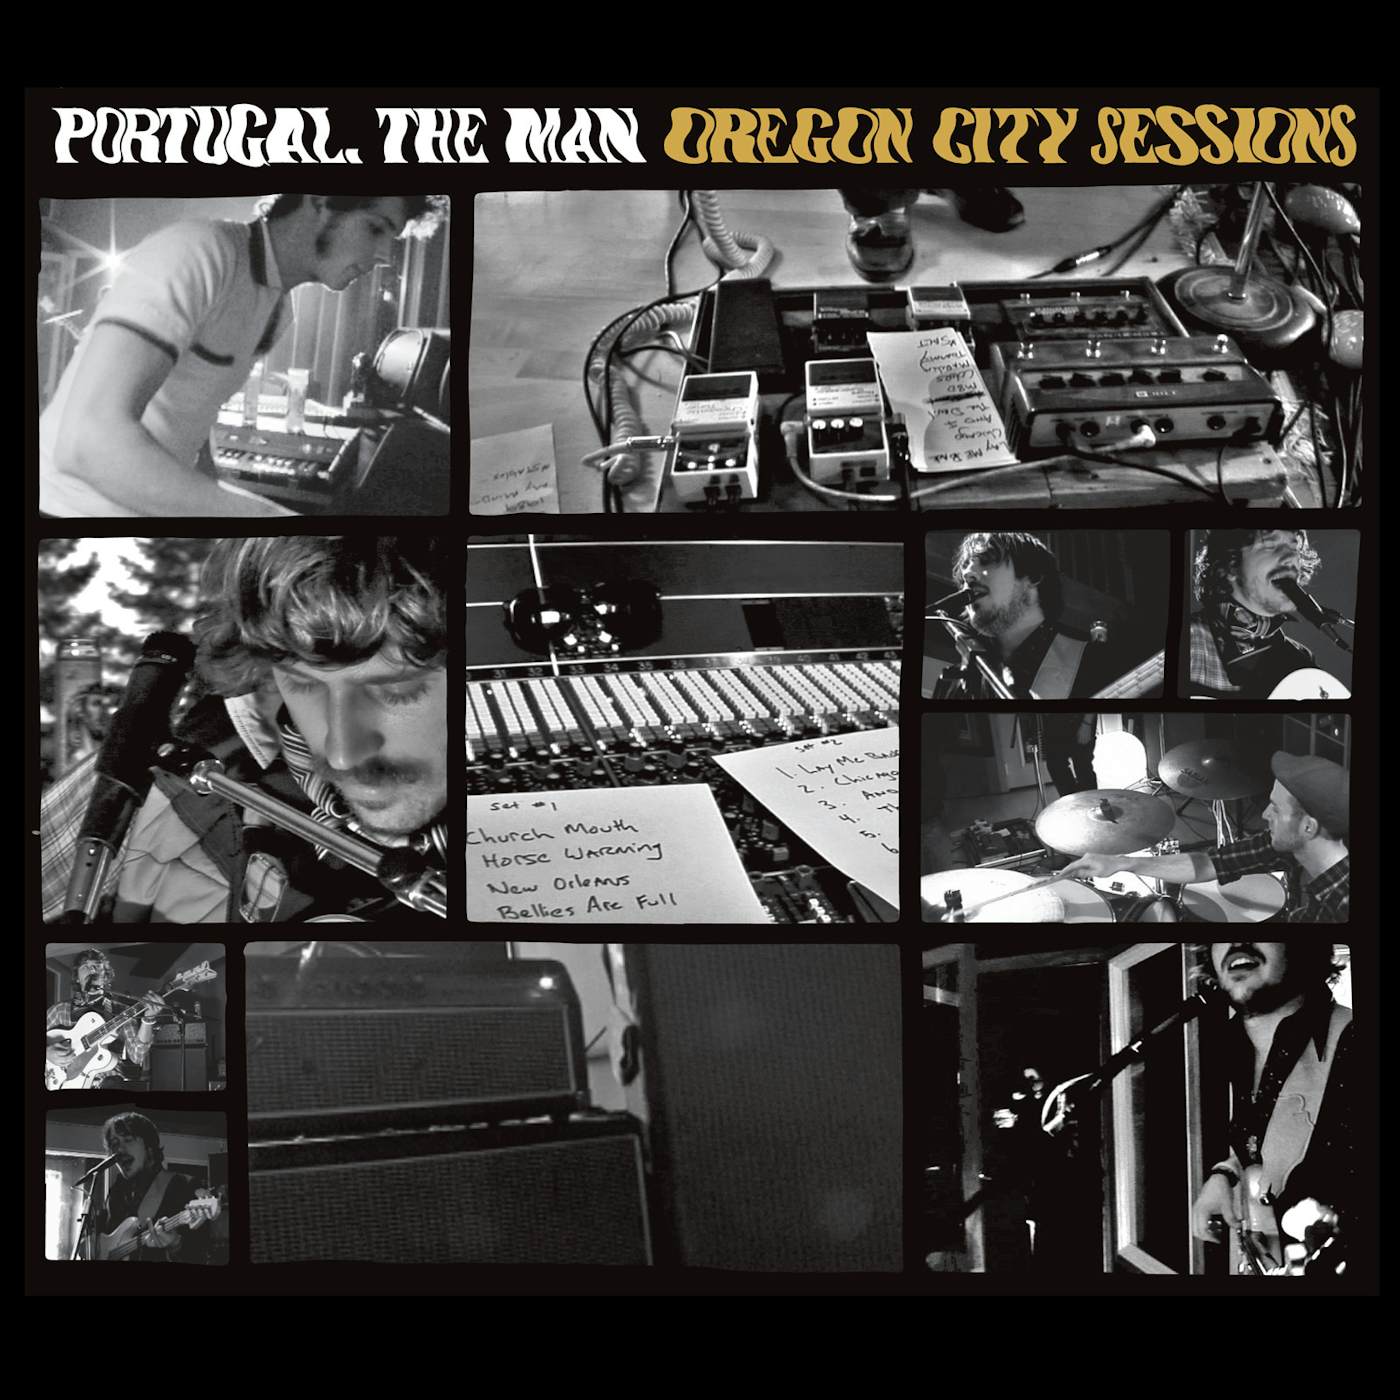 Portugal. The Man Oregon City Sessions Vinyl Record